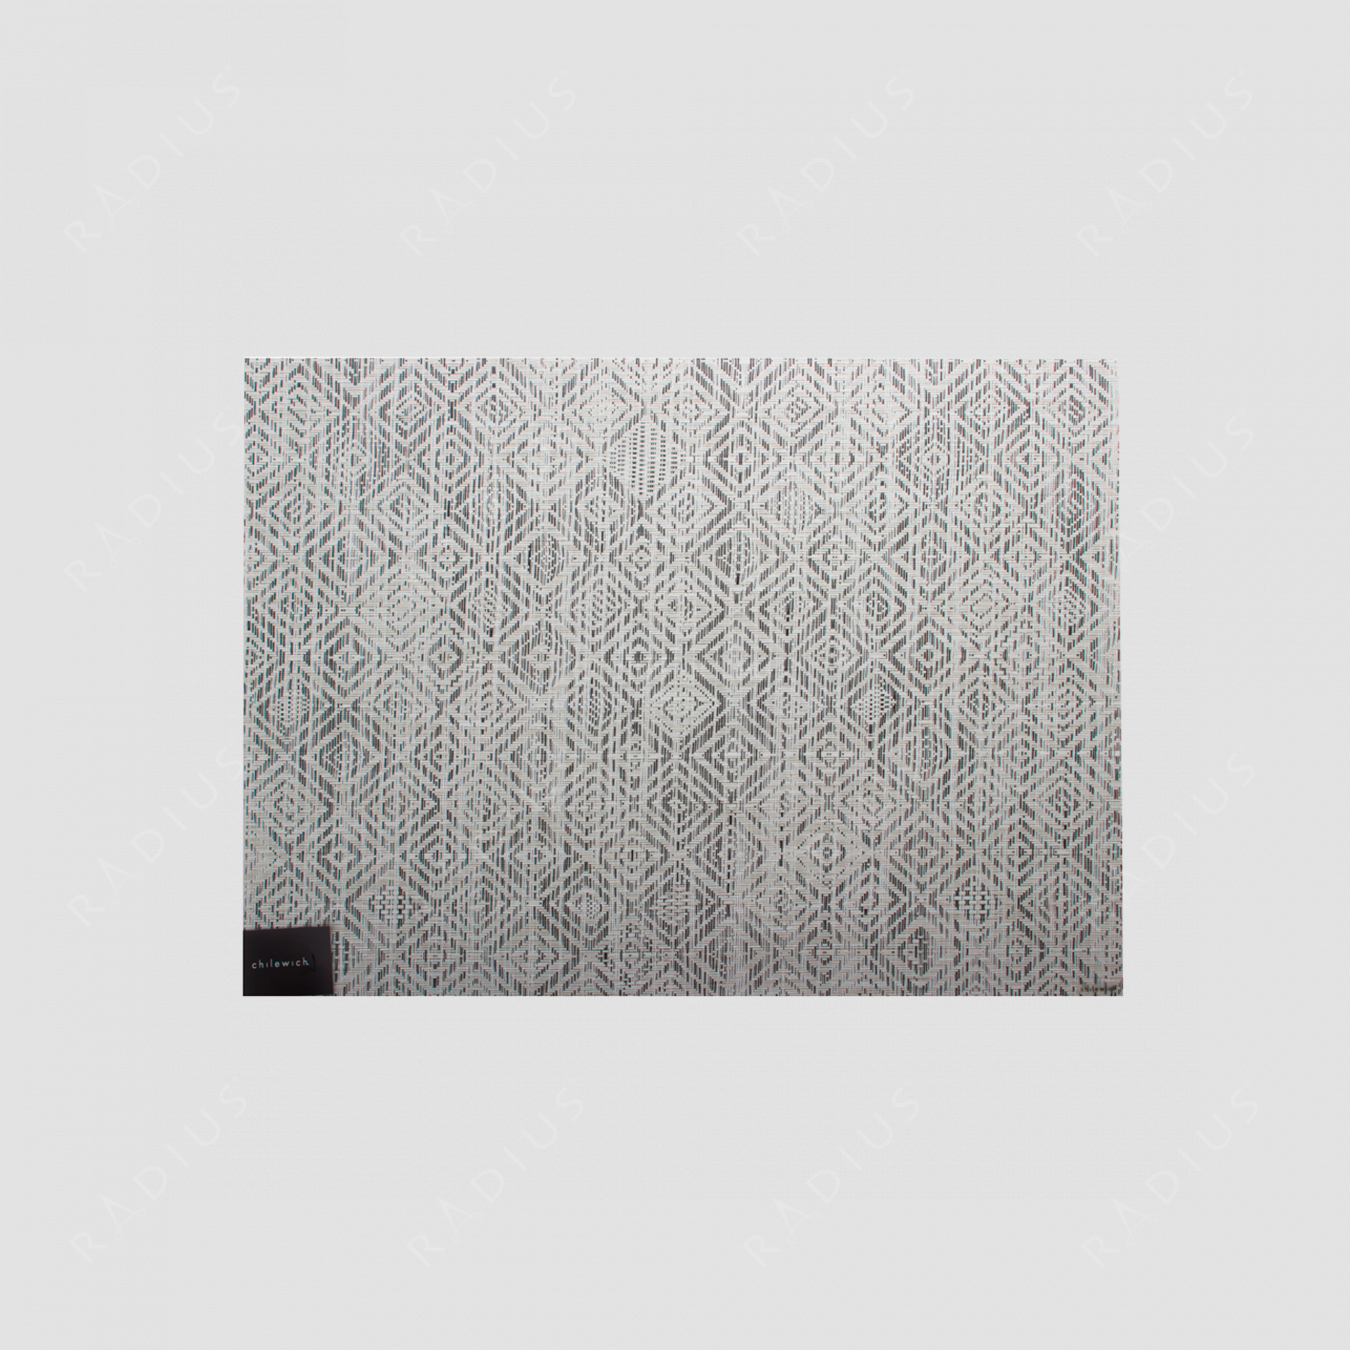 Салфетка подстановочная, винил, размер 36х48 см, White/Black, винил, серия Mosaic, CHILEWICH, США